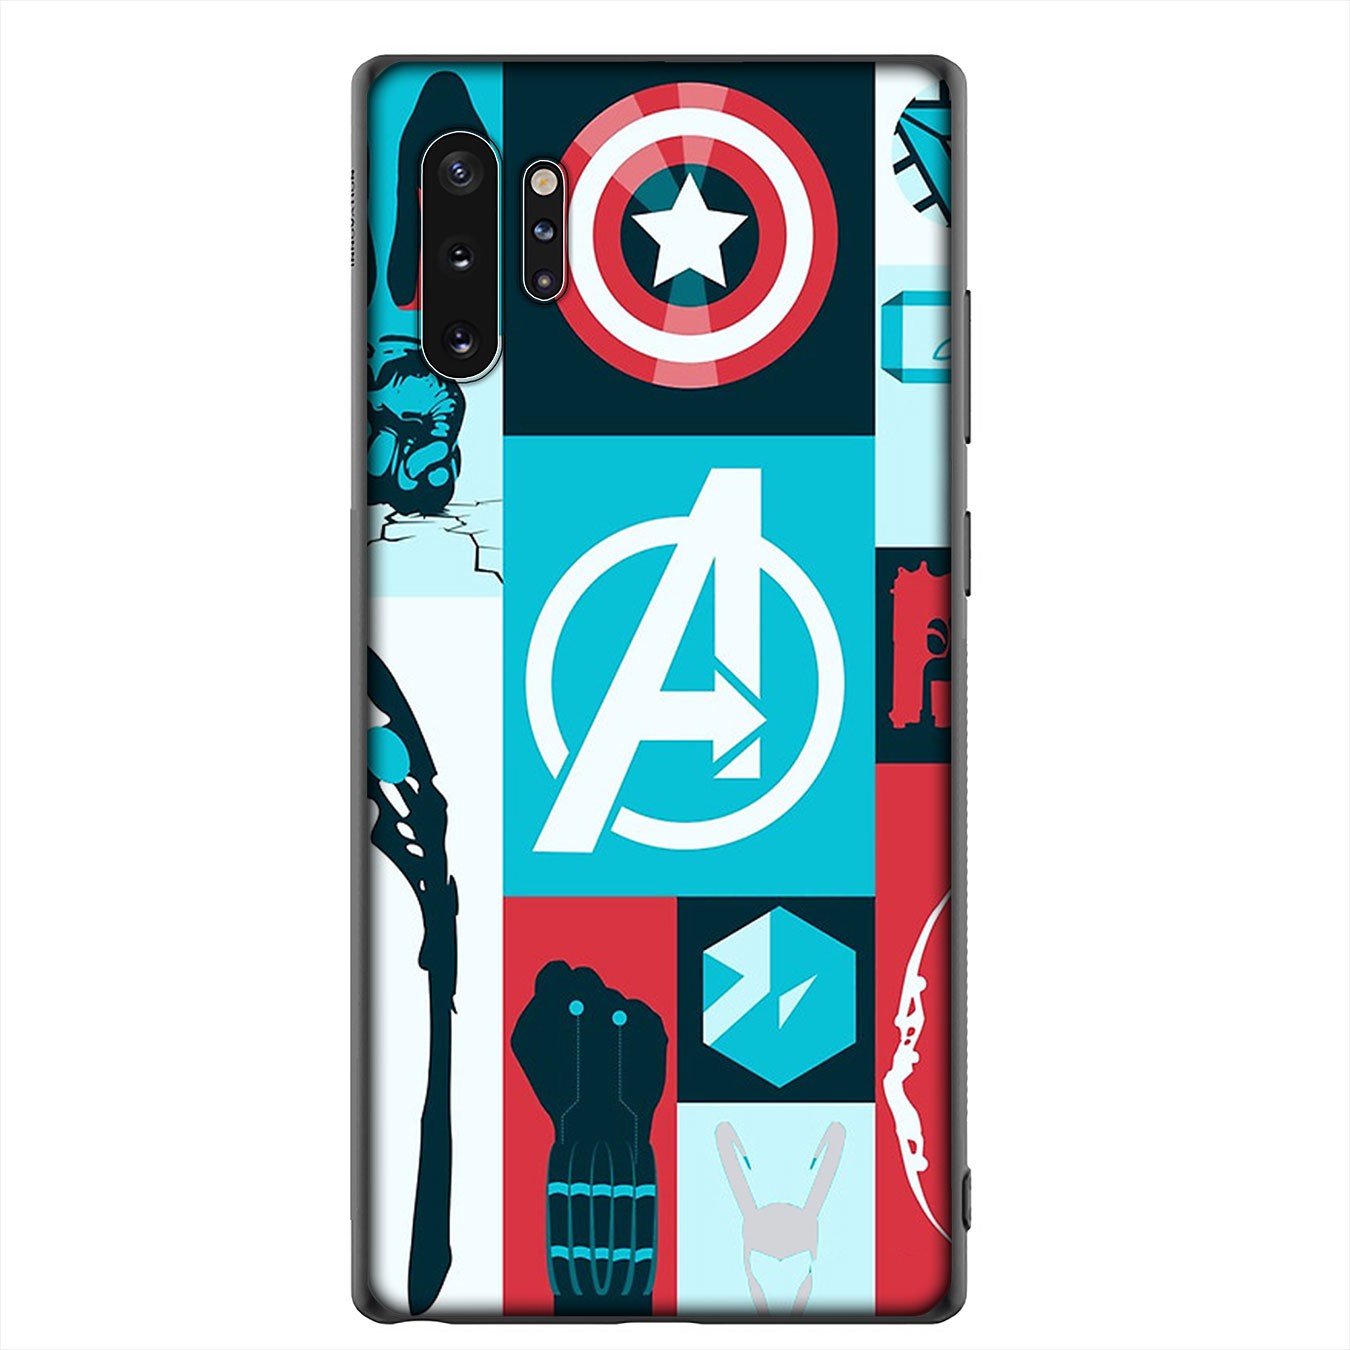 Samsung Galaxy A11 A31 A10 A20 A30 A50 A10S A20S A30S A50S A71 A51 Phone Case Soft Silicone Casing The Avengers Marvel Deadpool  Captain America